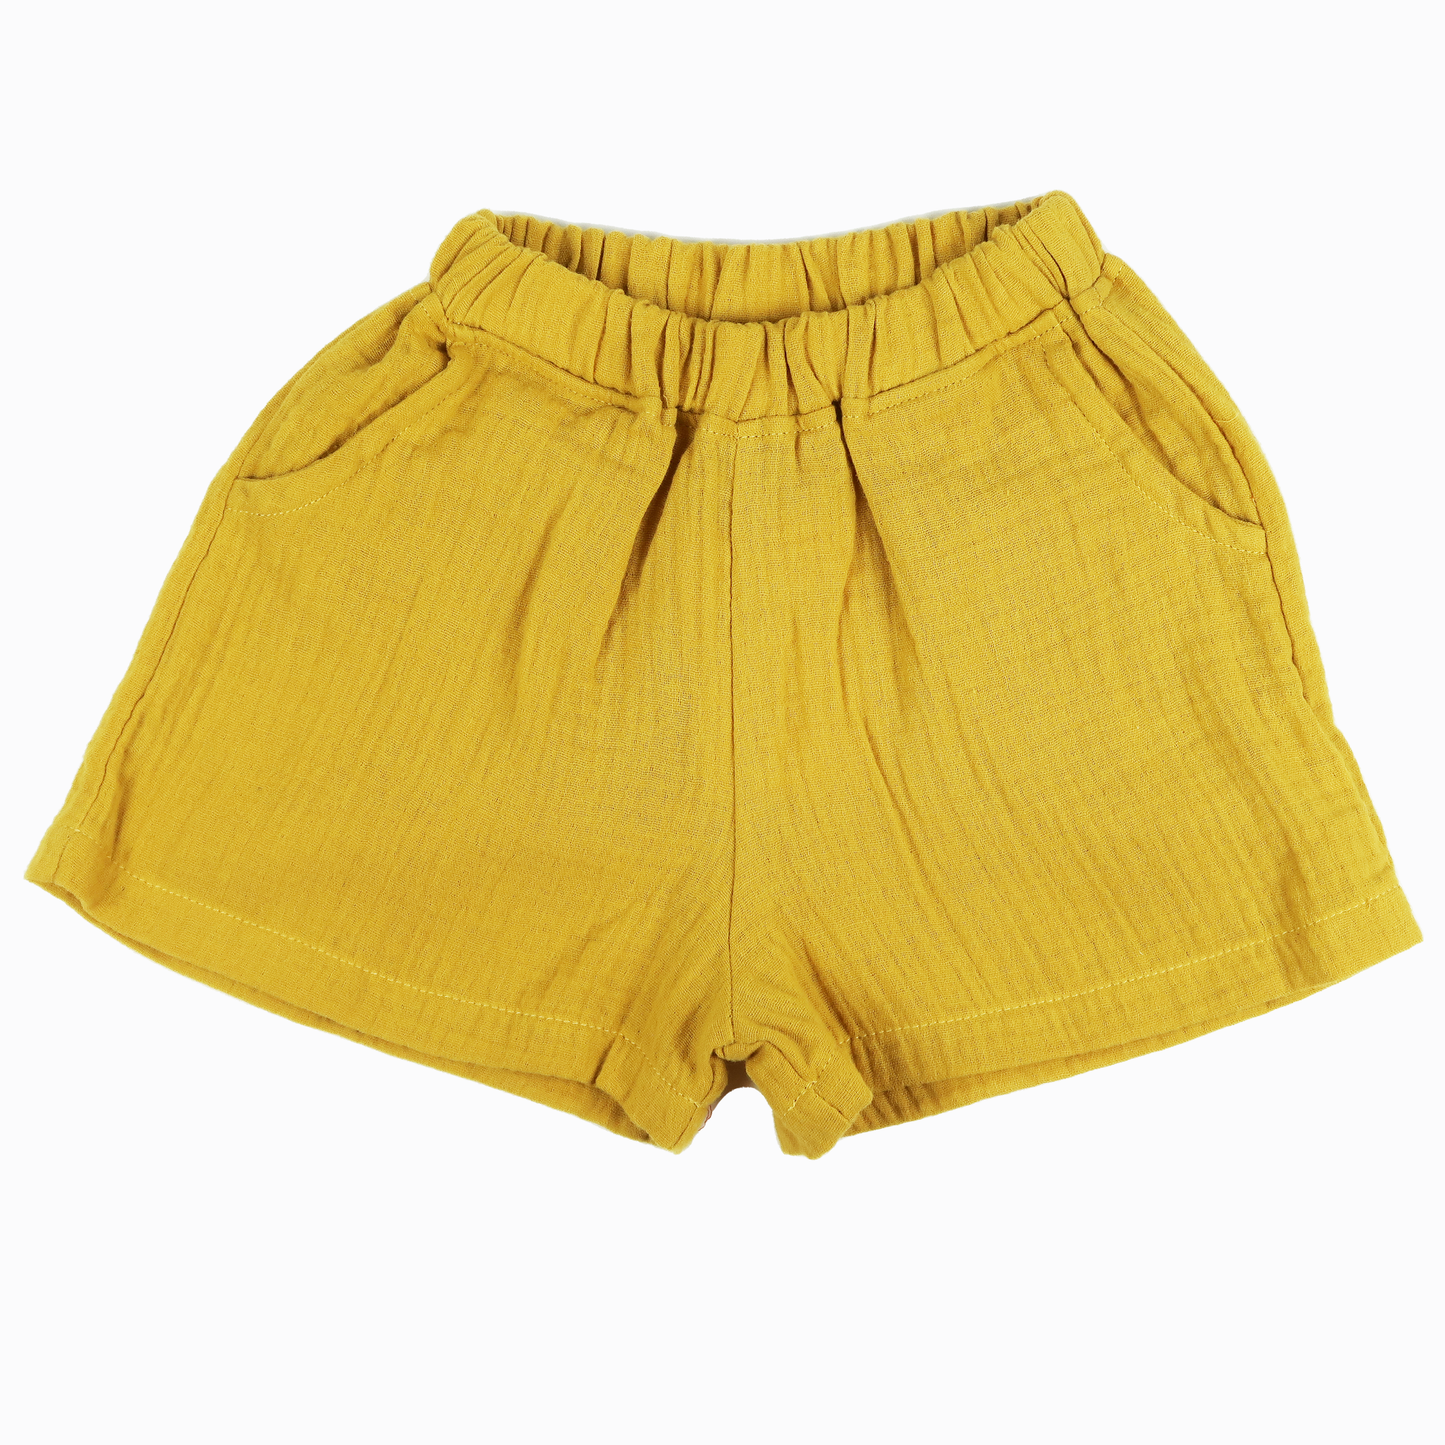 Shorts - Cotton Gauze - Dark yellow